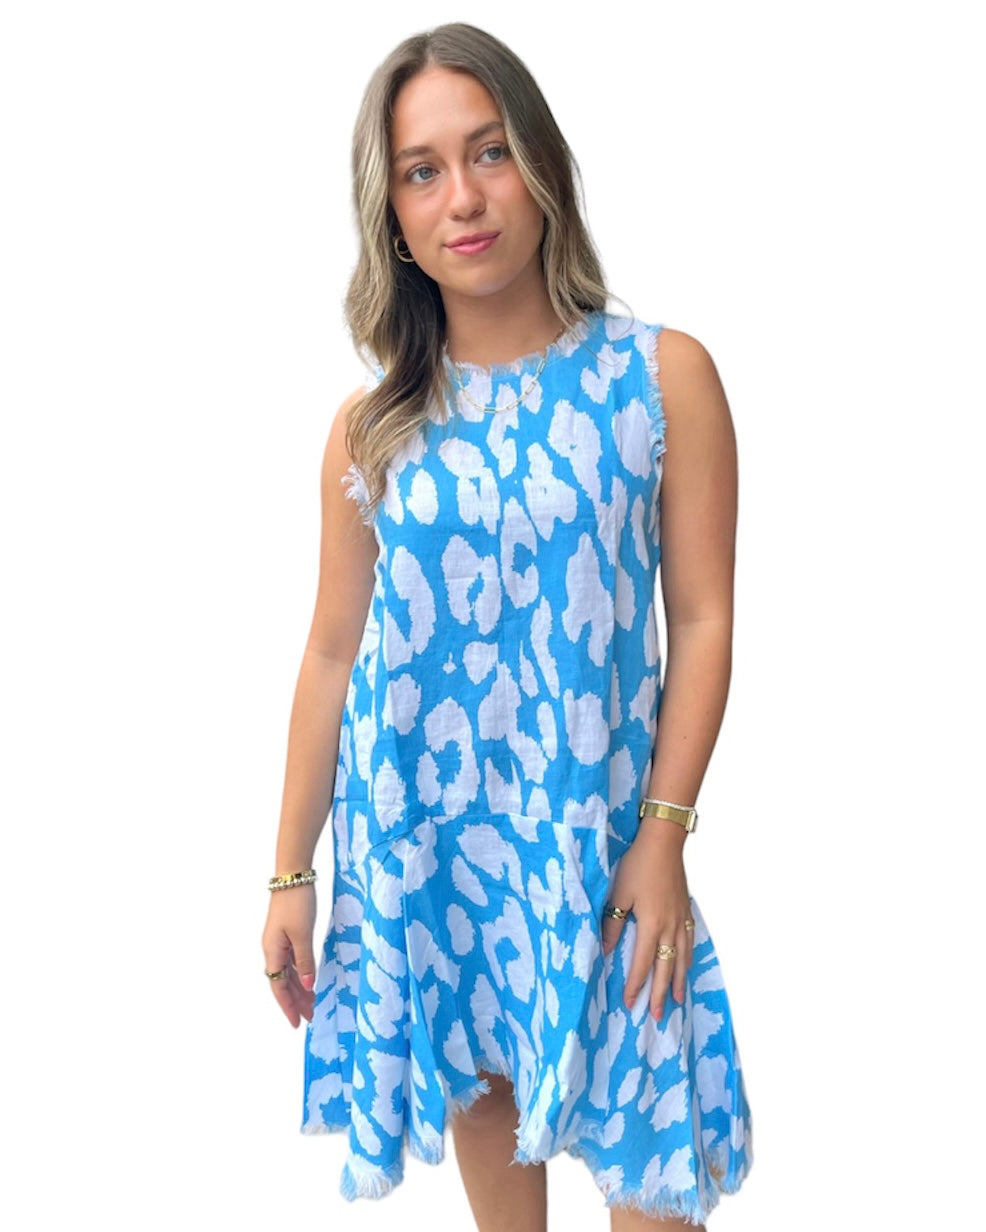 POSITANO DRESS - Blue Leopard